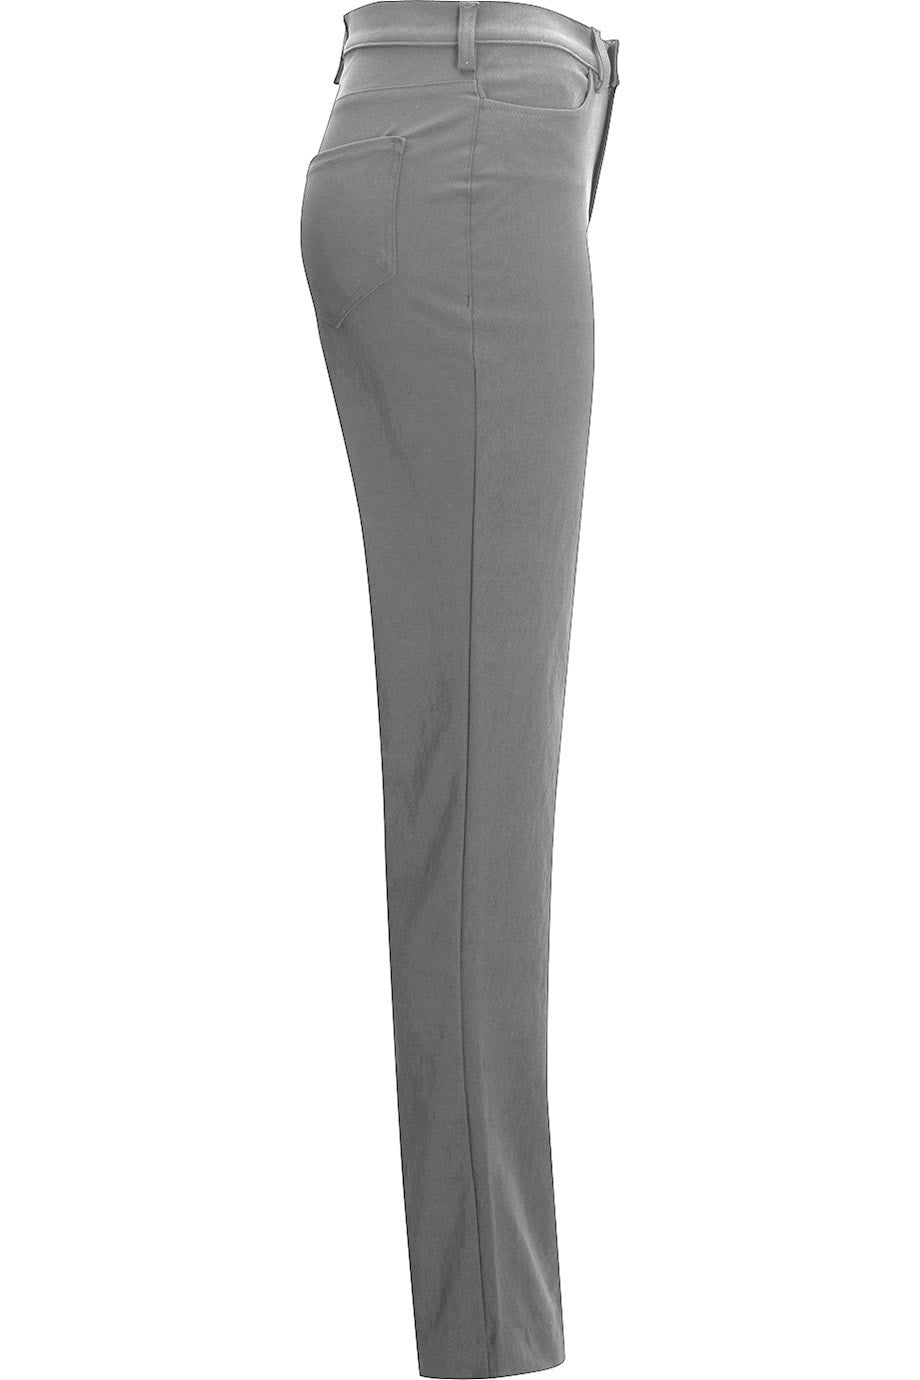 Women's Flex Chino Pant, Grey